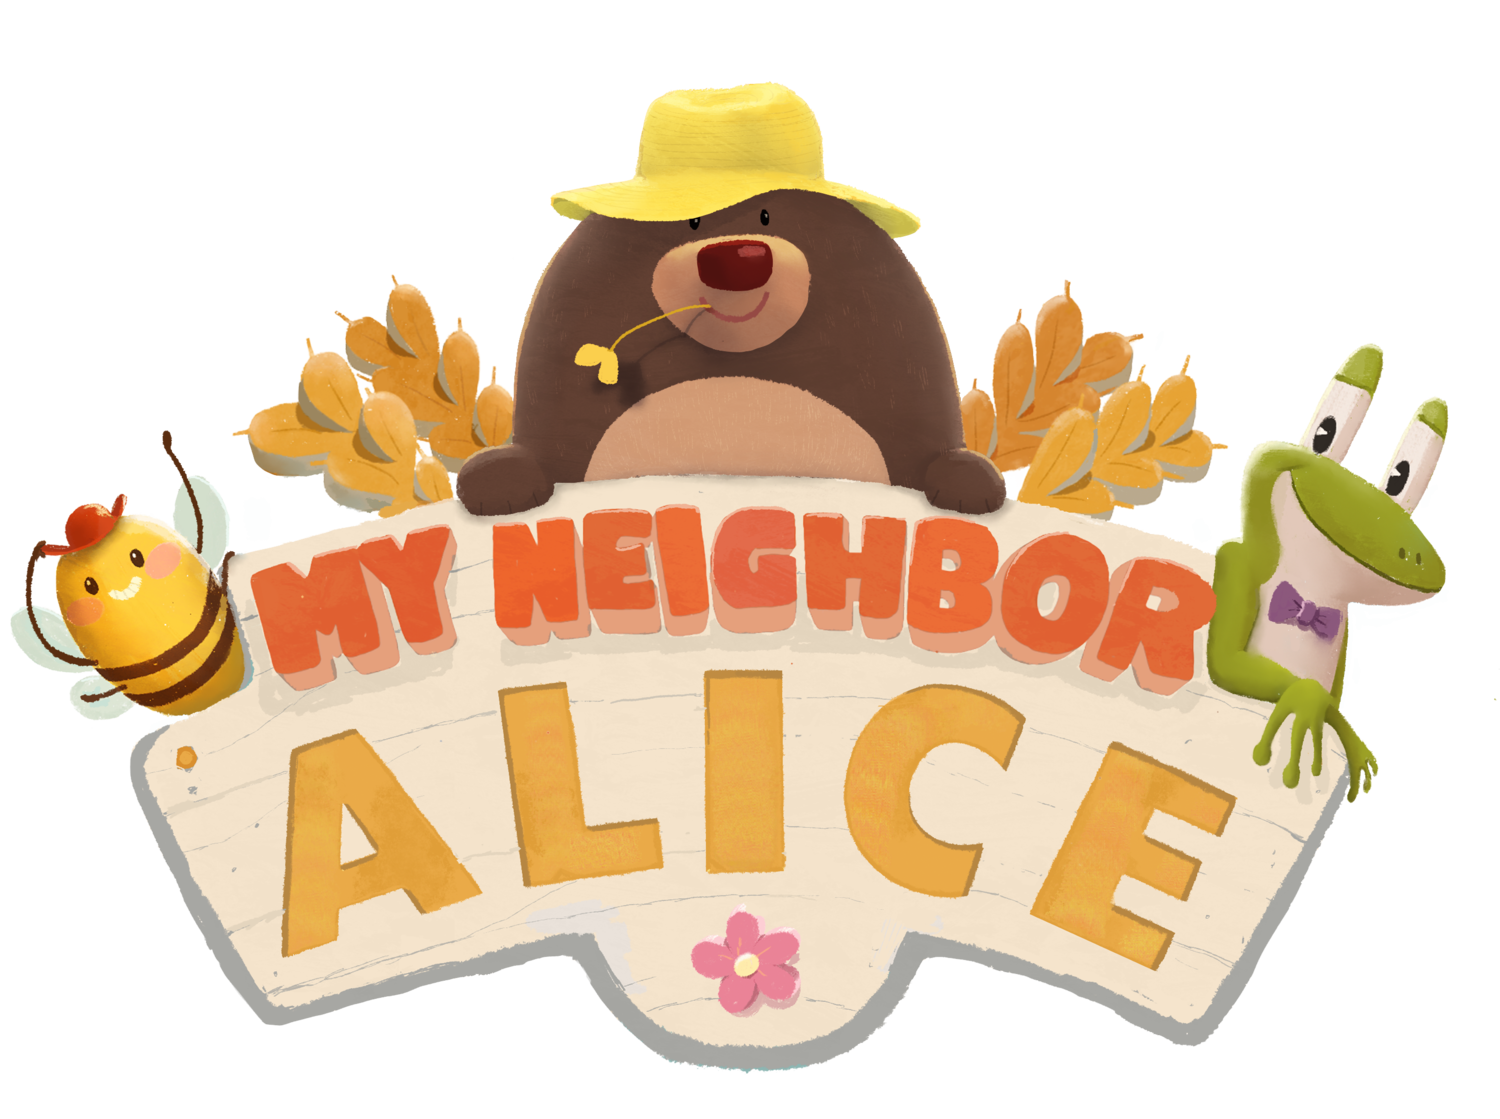 My Neighbor Alice là gì?